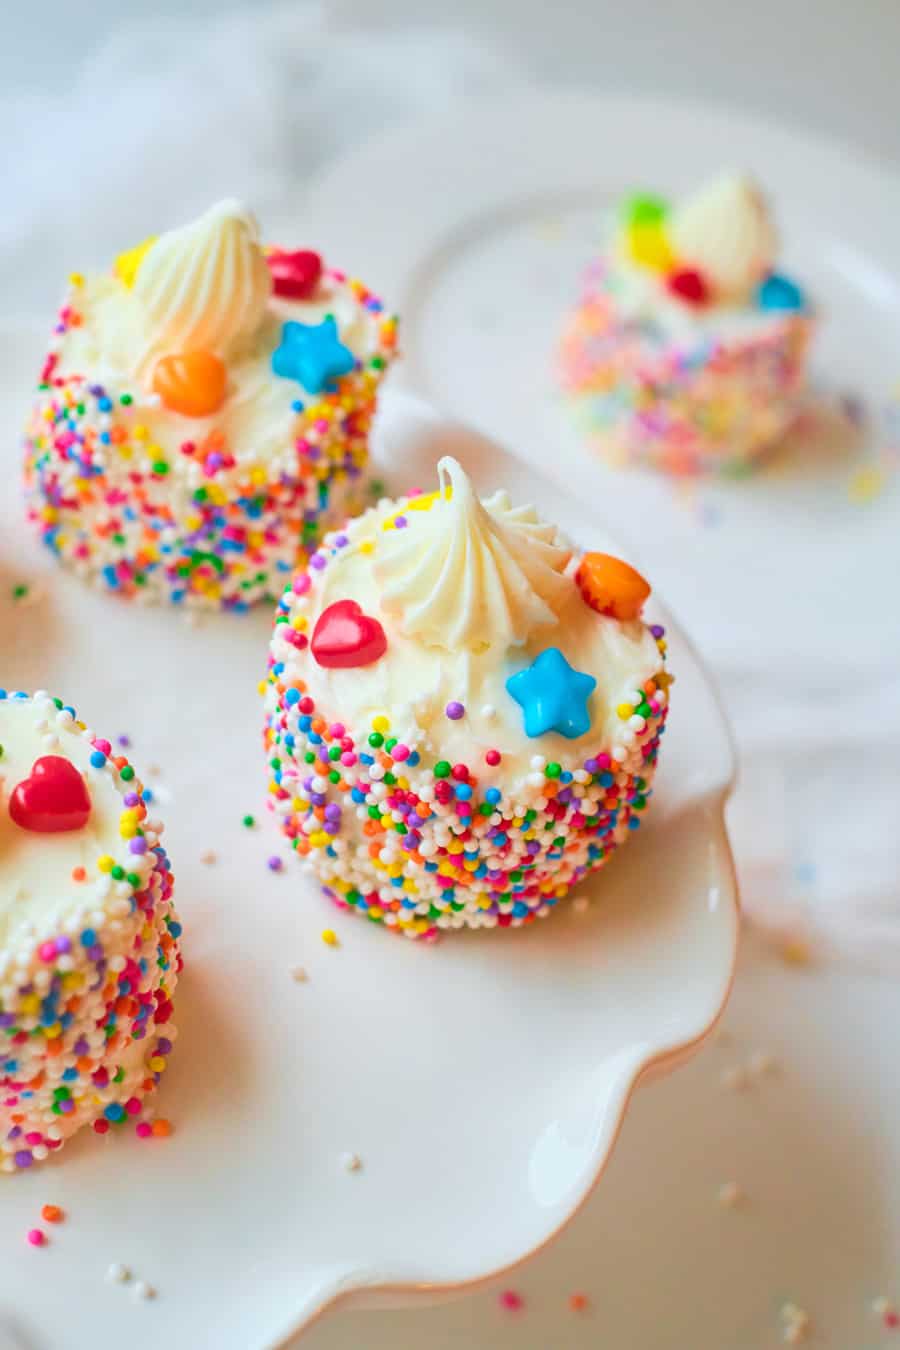 Mini rainbow cakes made of oreos